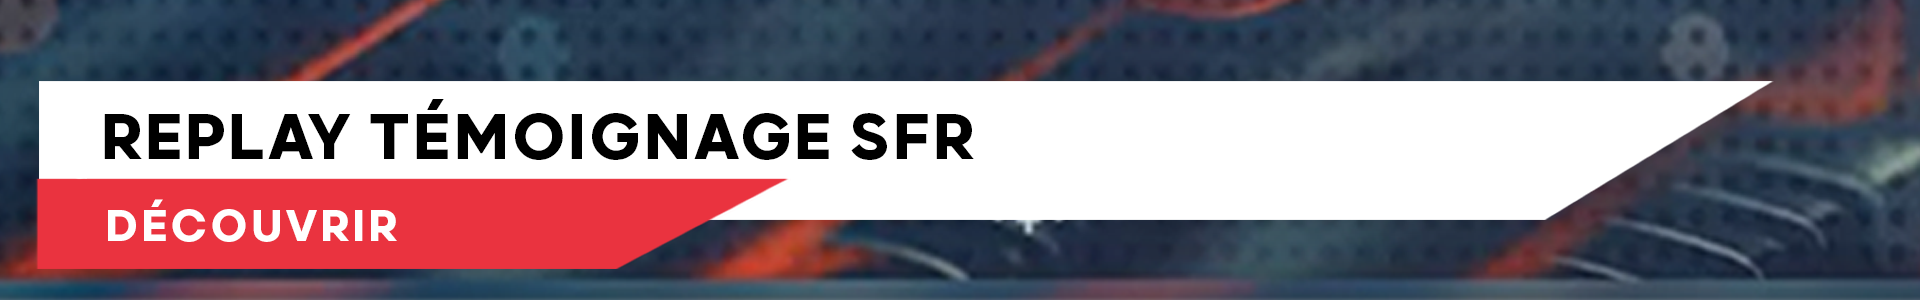 Replay témoignage SFR